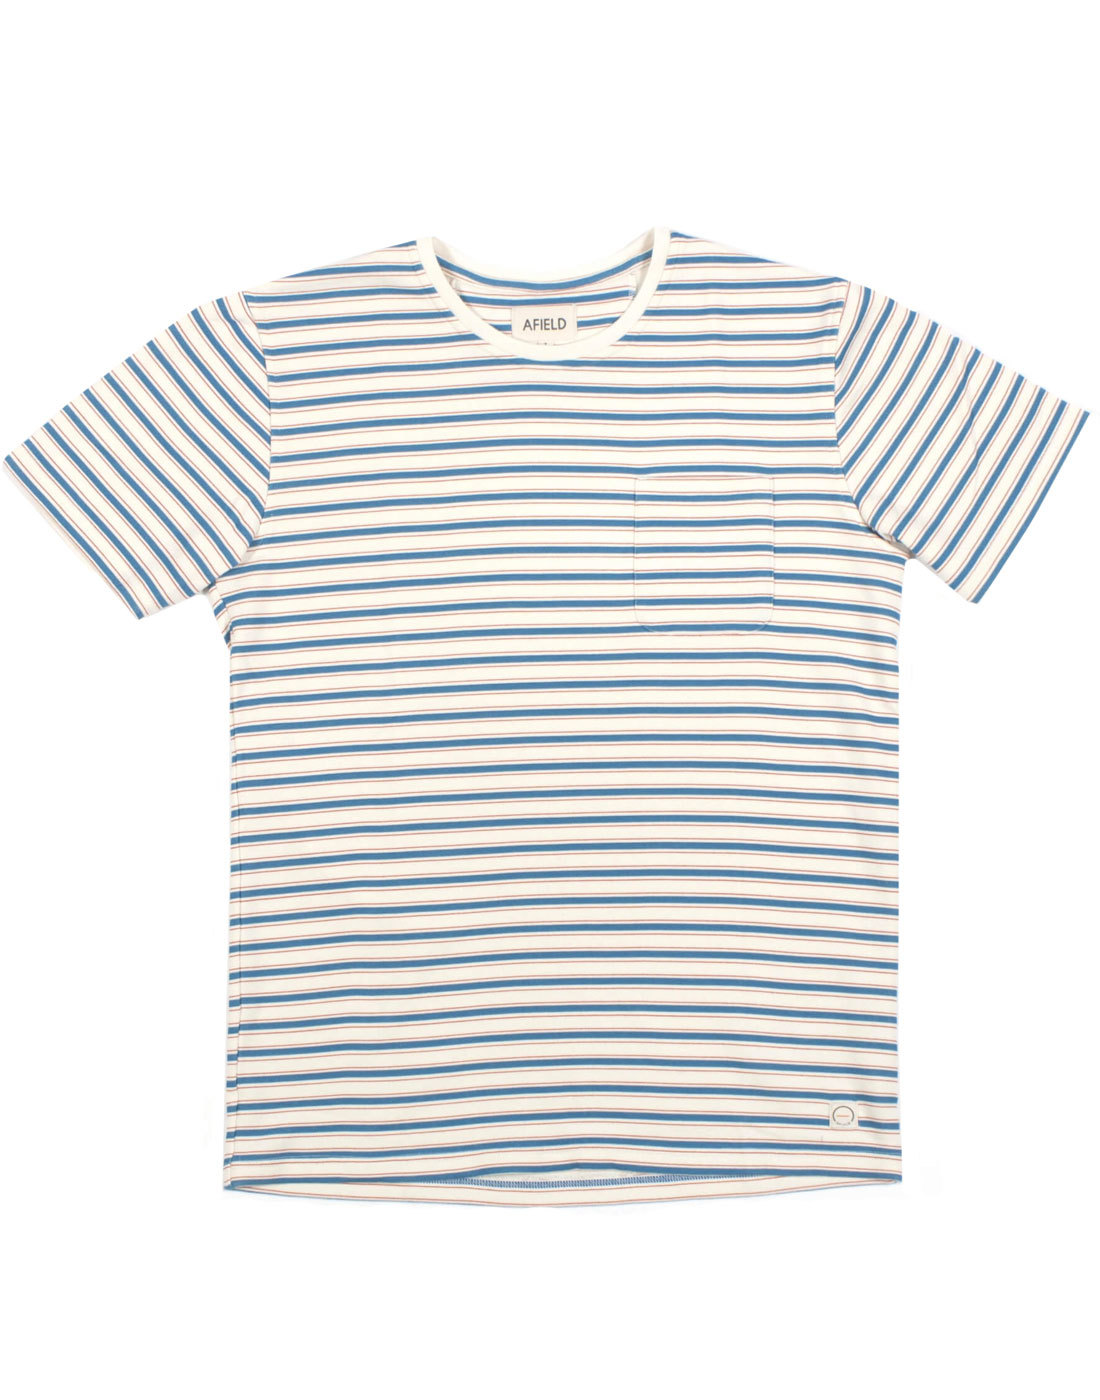 AFIELD Mens Retro Mod Woven Terry Stripe Pocket Crew Neck T-Shirt